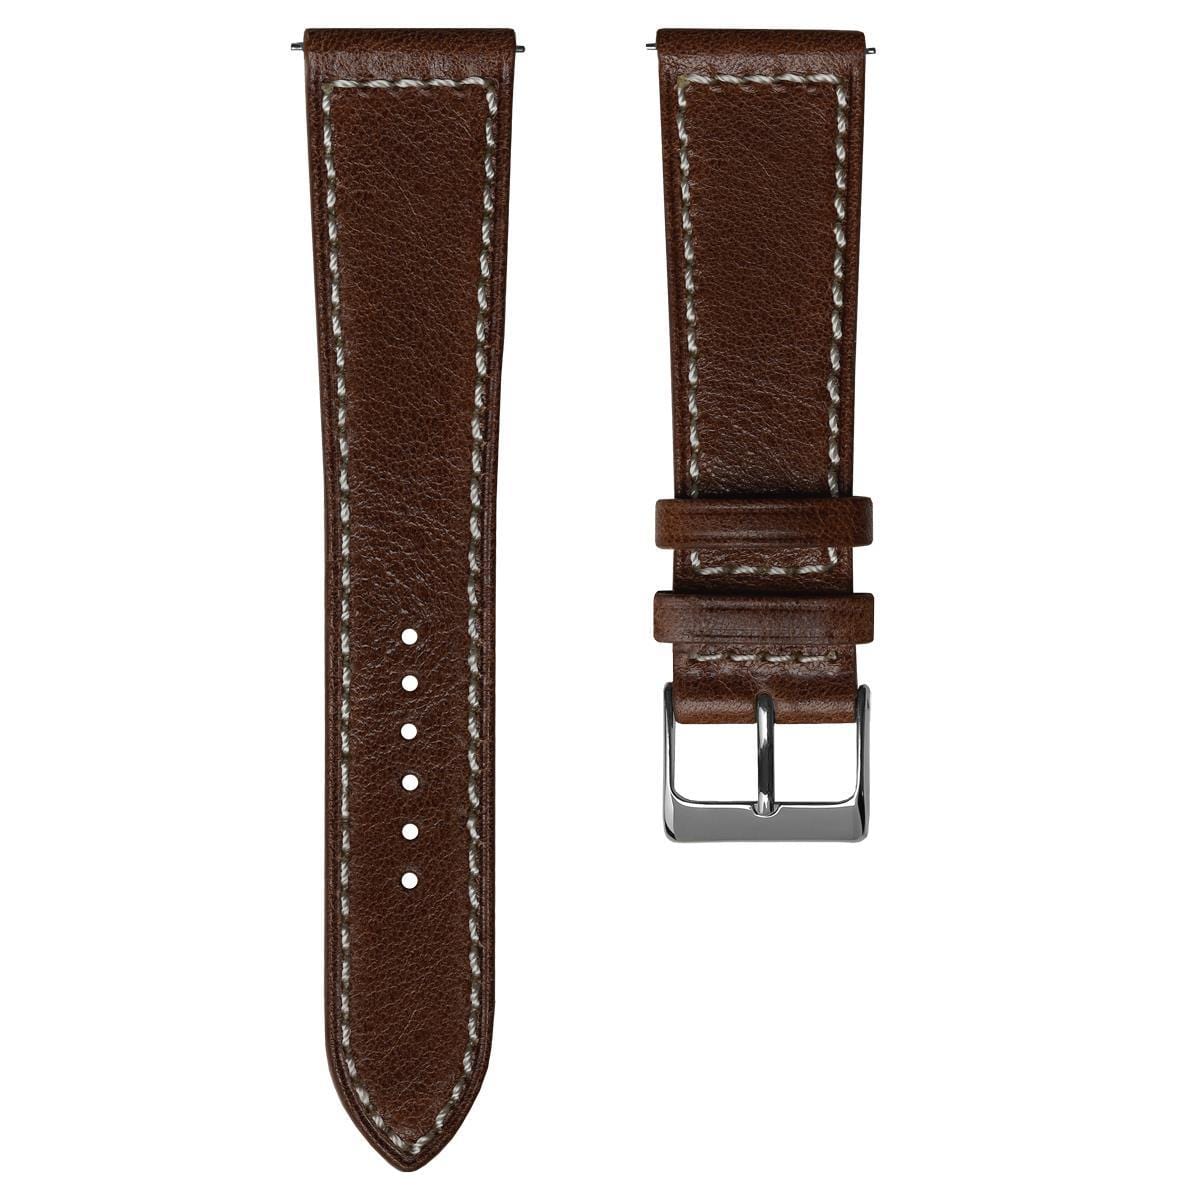 Dulas Vintage Genuine Leather Quick Release Dress Watch Strap - Brown / White Stitch